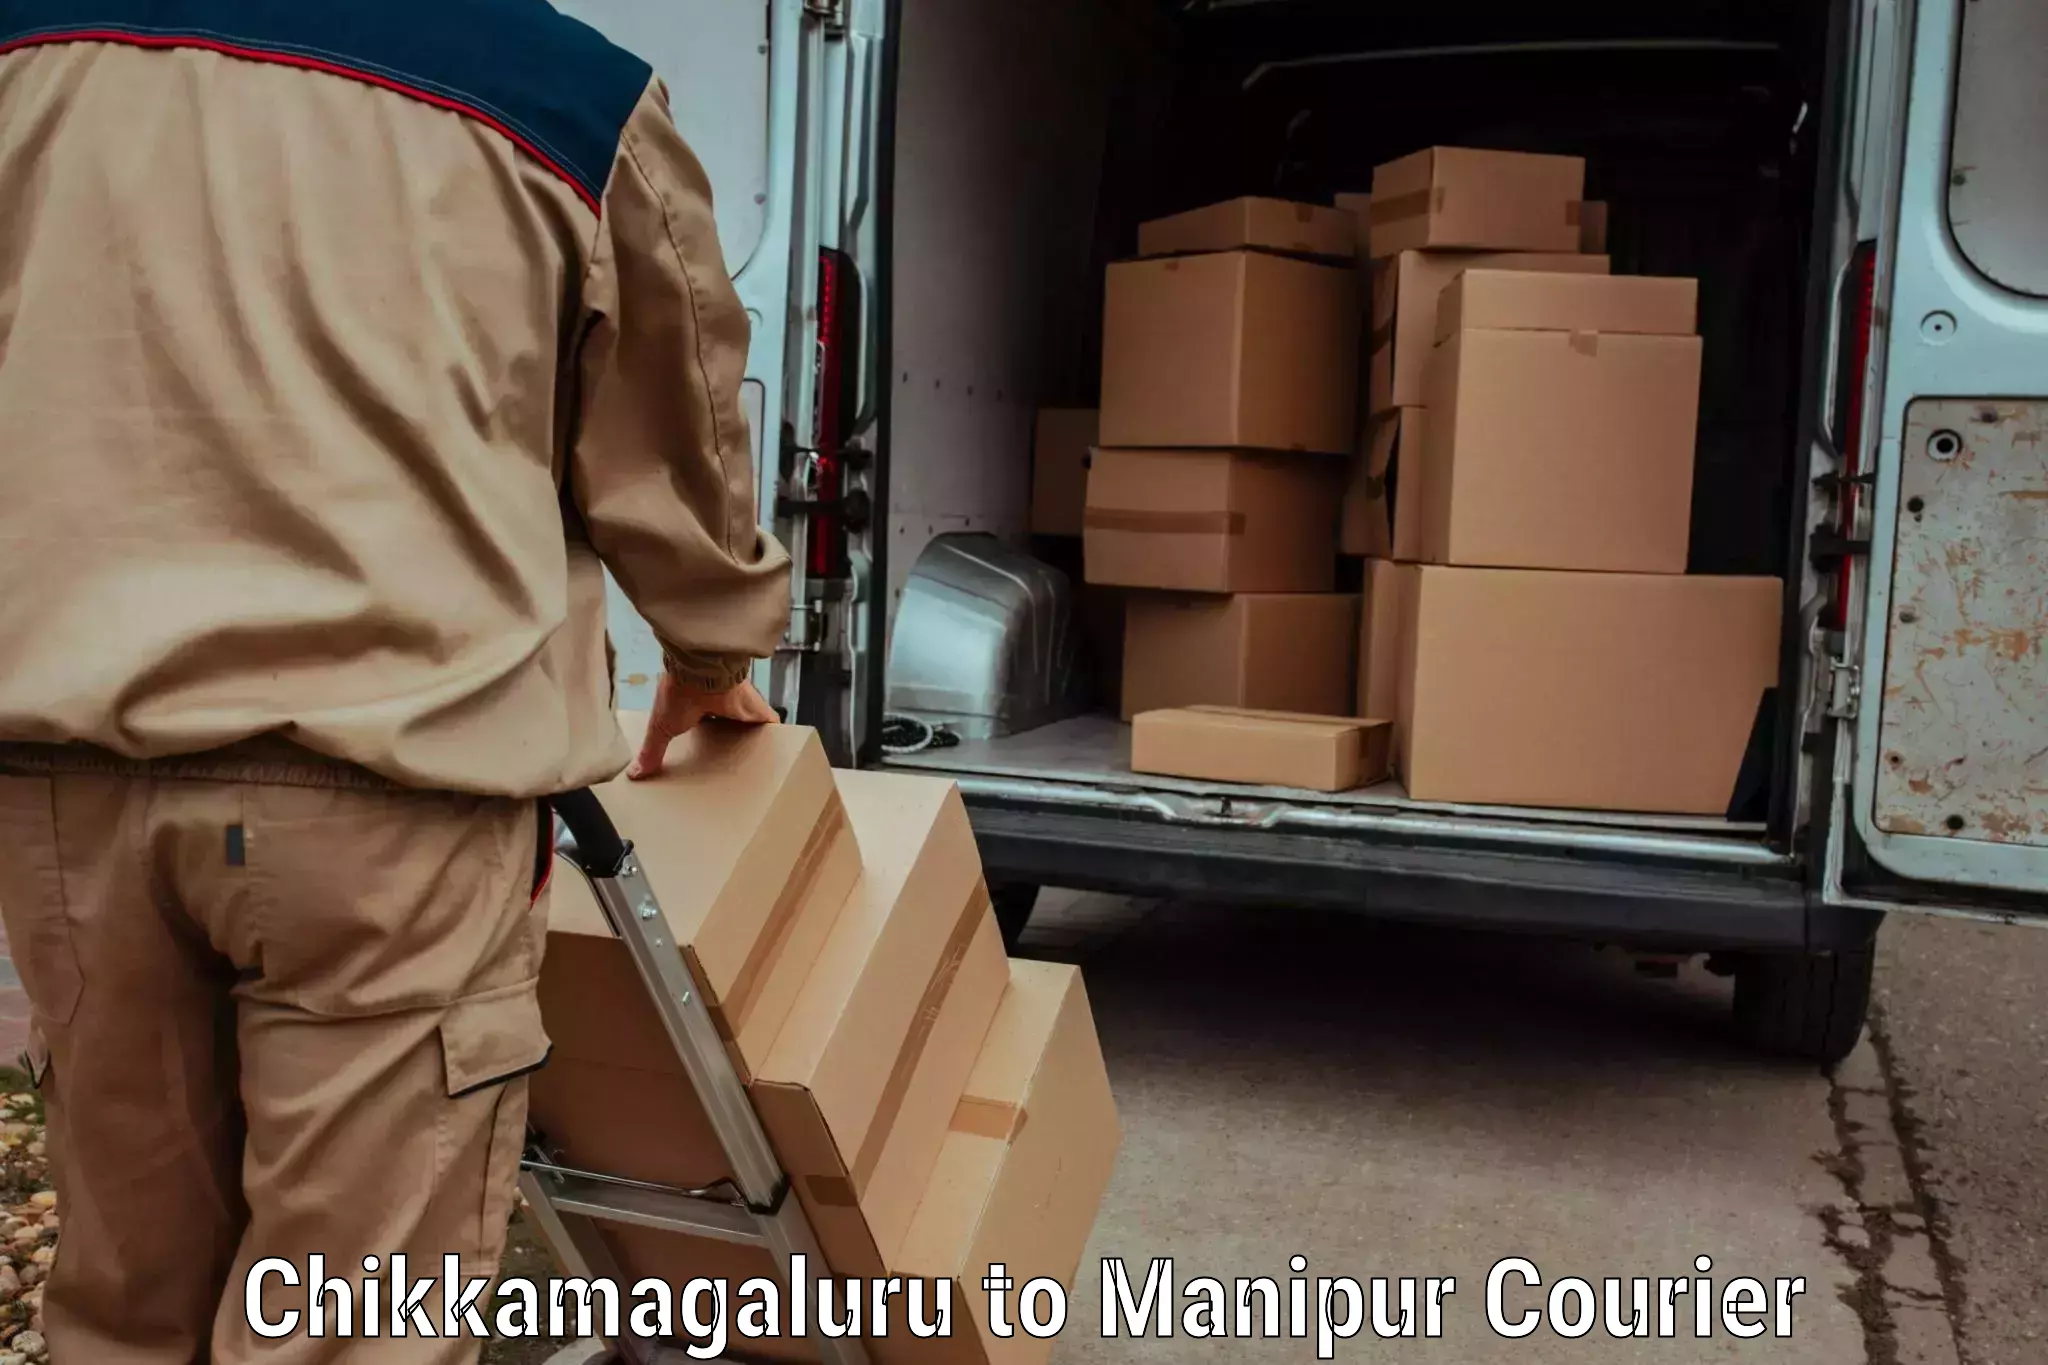 Courier service partnerships Chikkamagaluru to Imphal